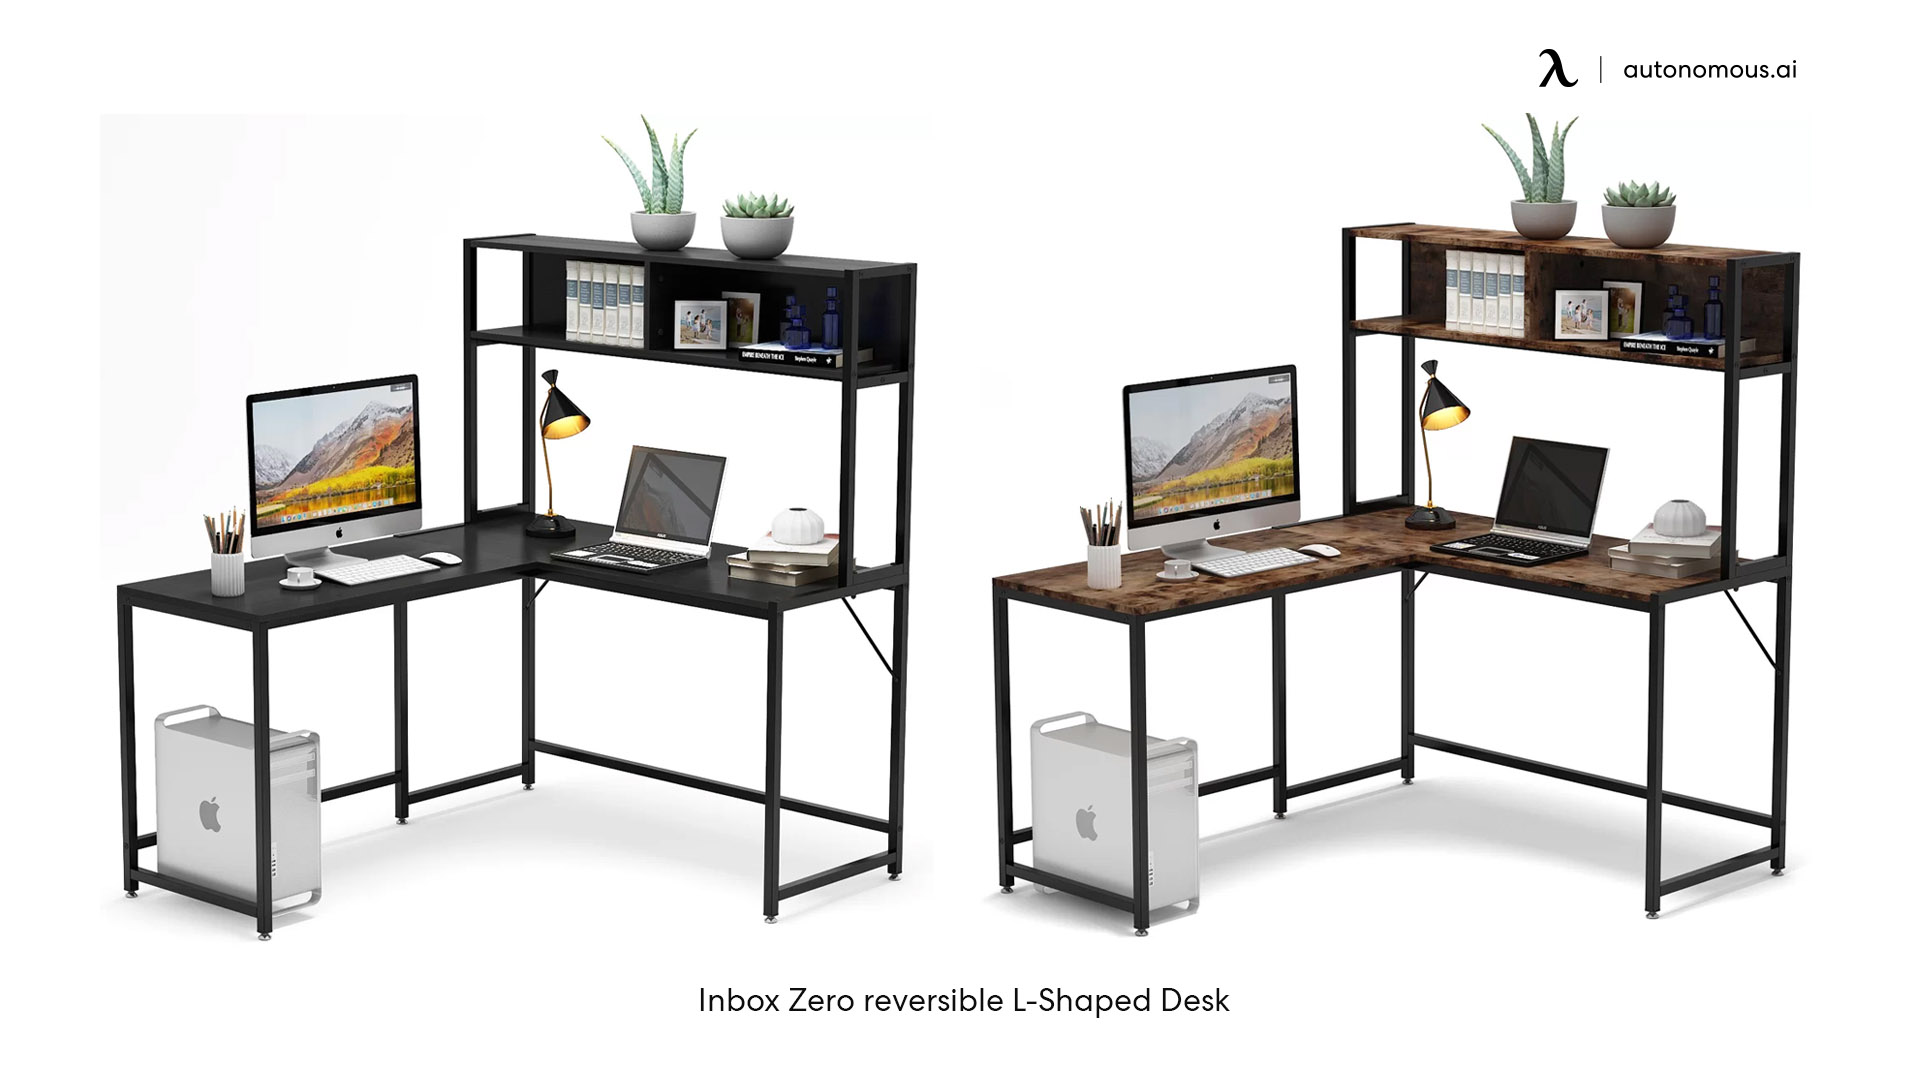 Reversible L-Shaped Desk from Inbox Zero